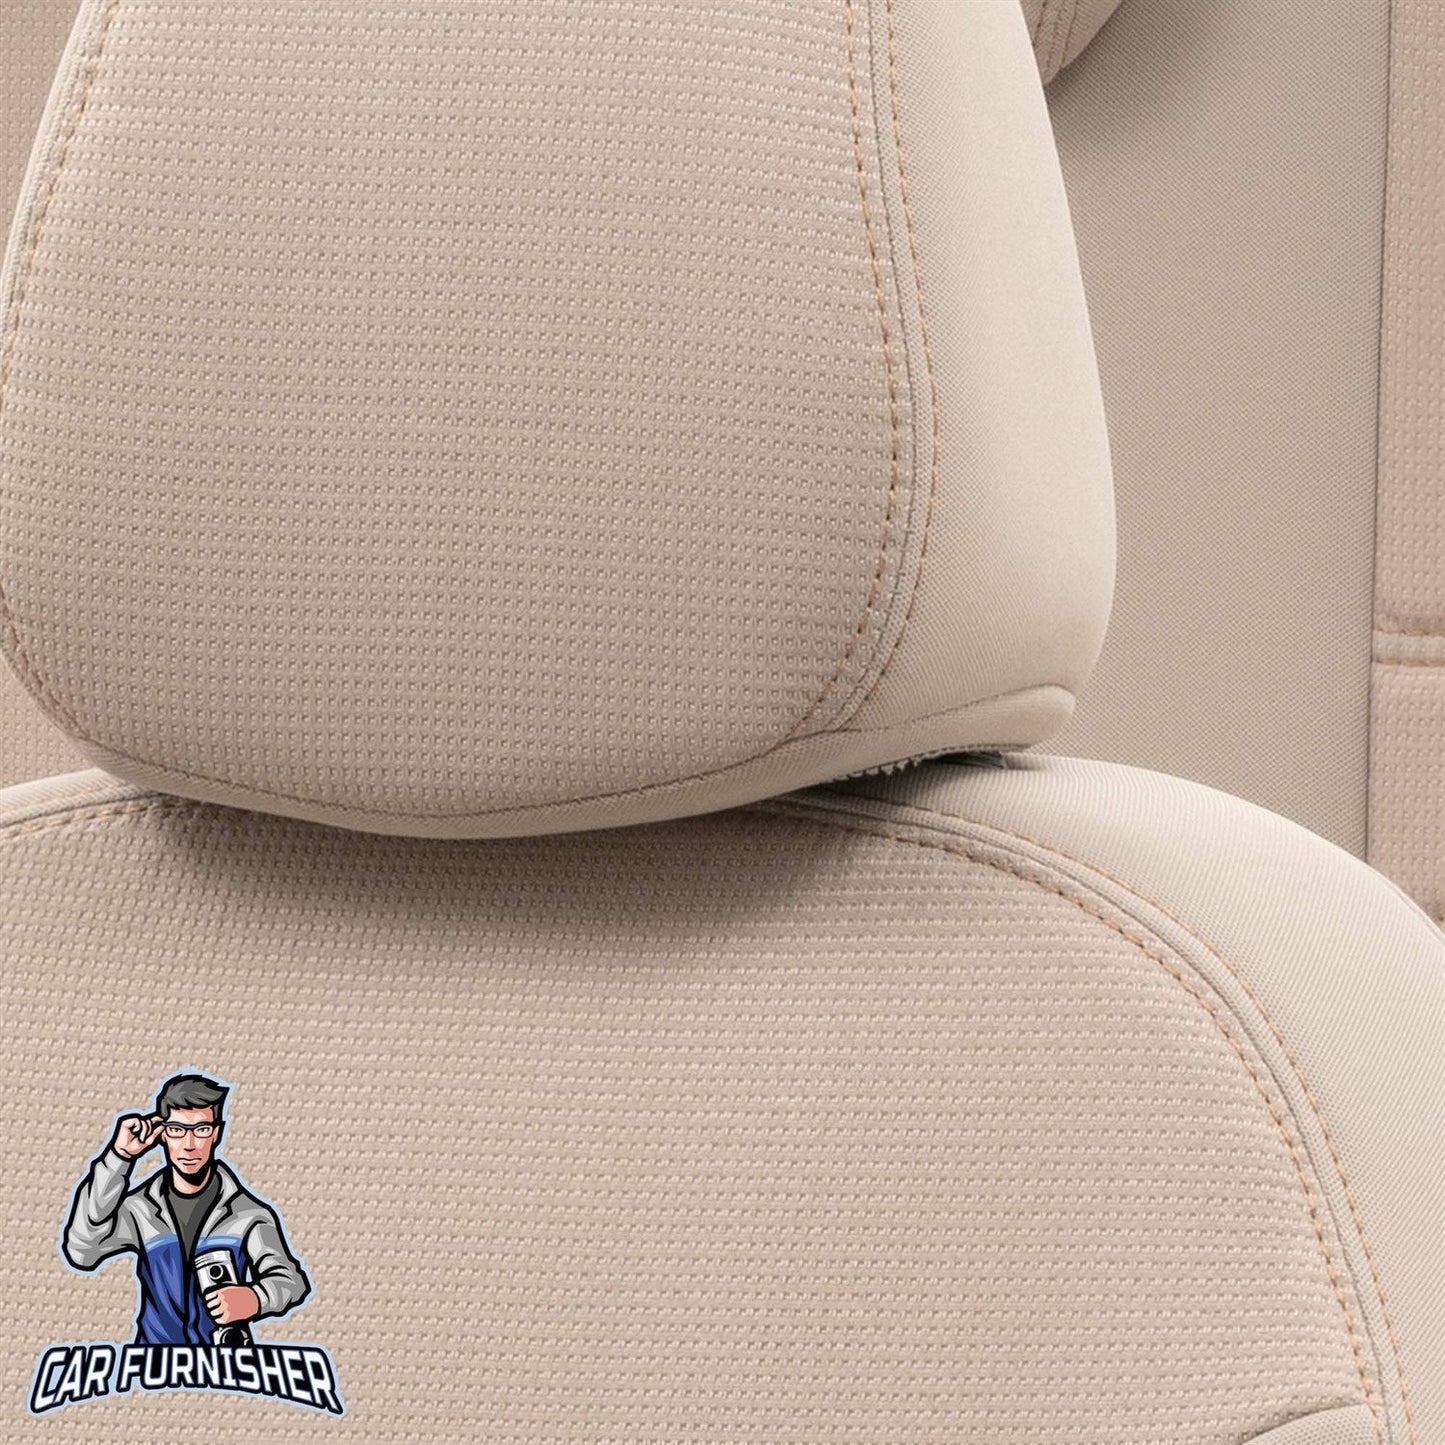 Fiat Freemont Seat Covers Original Jacquard Design Beige Jacquard Fabric